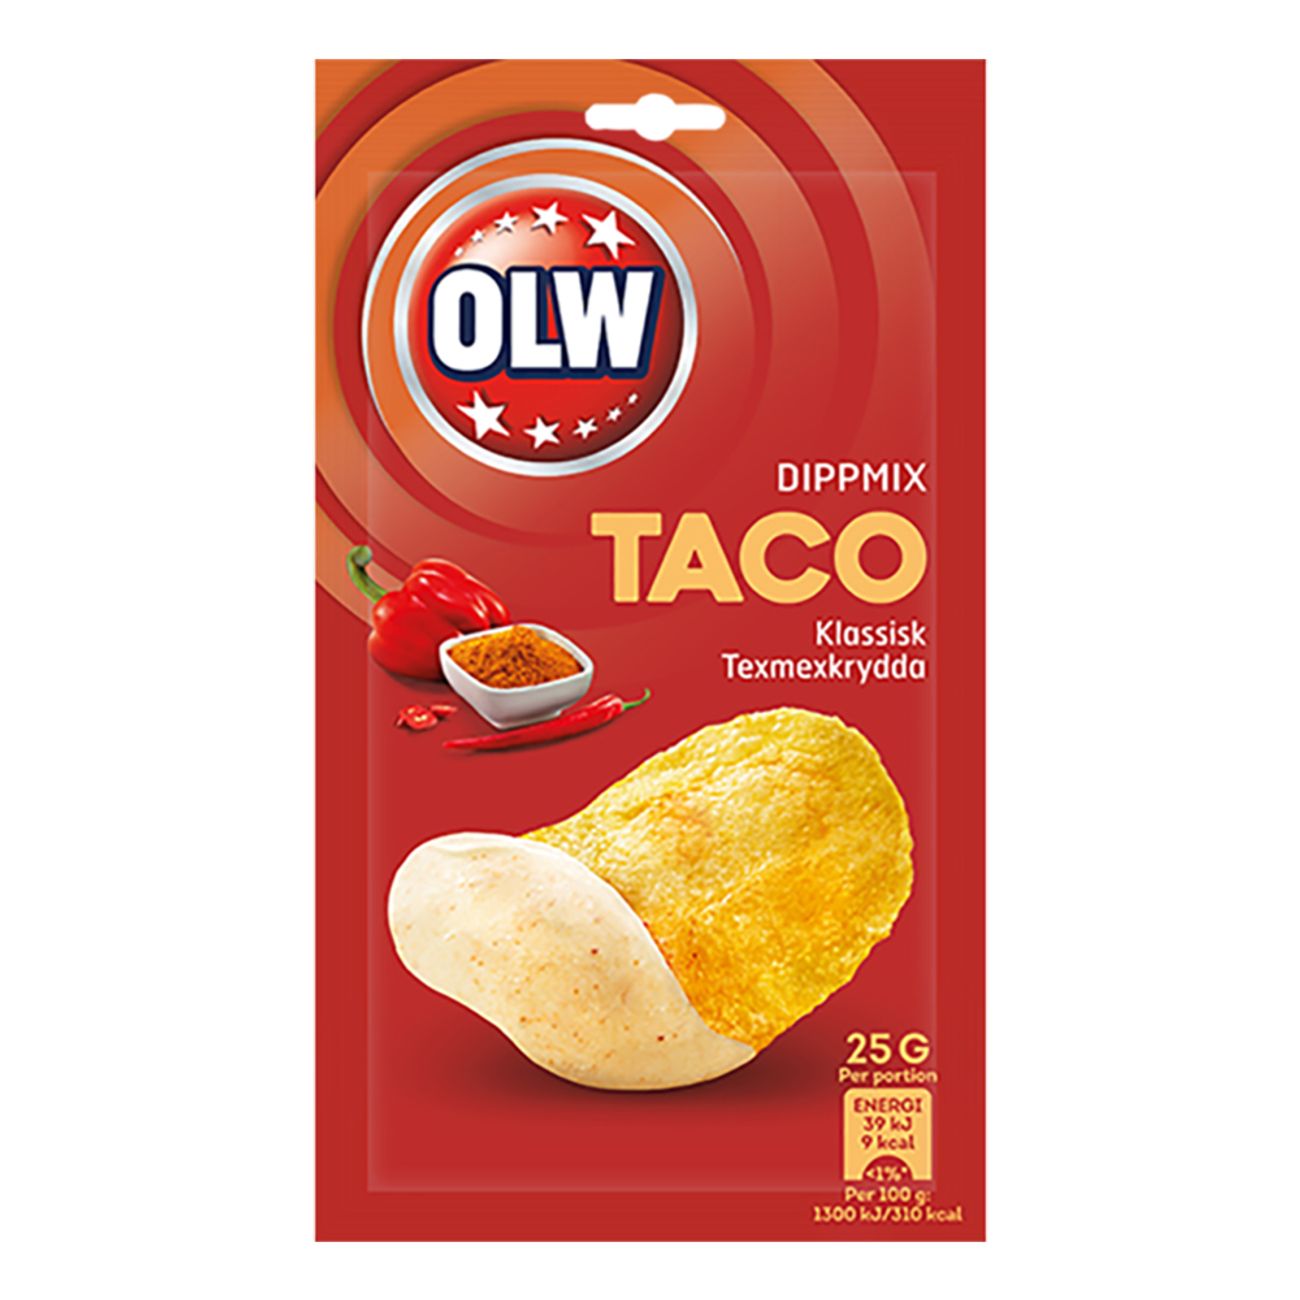 olw-dippmix-taco-49408-2